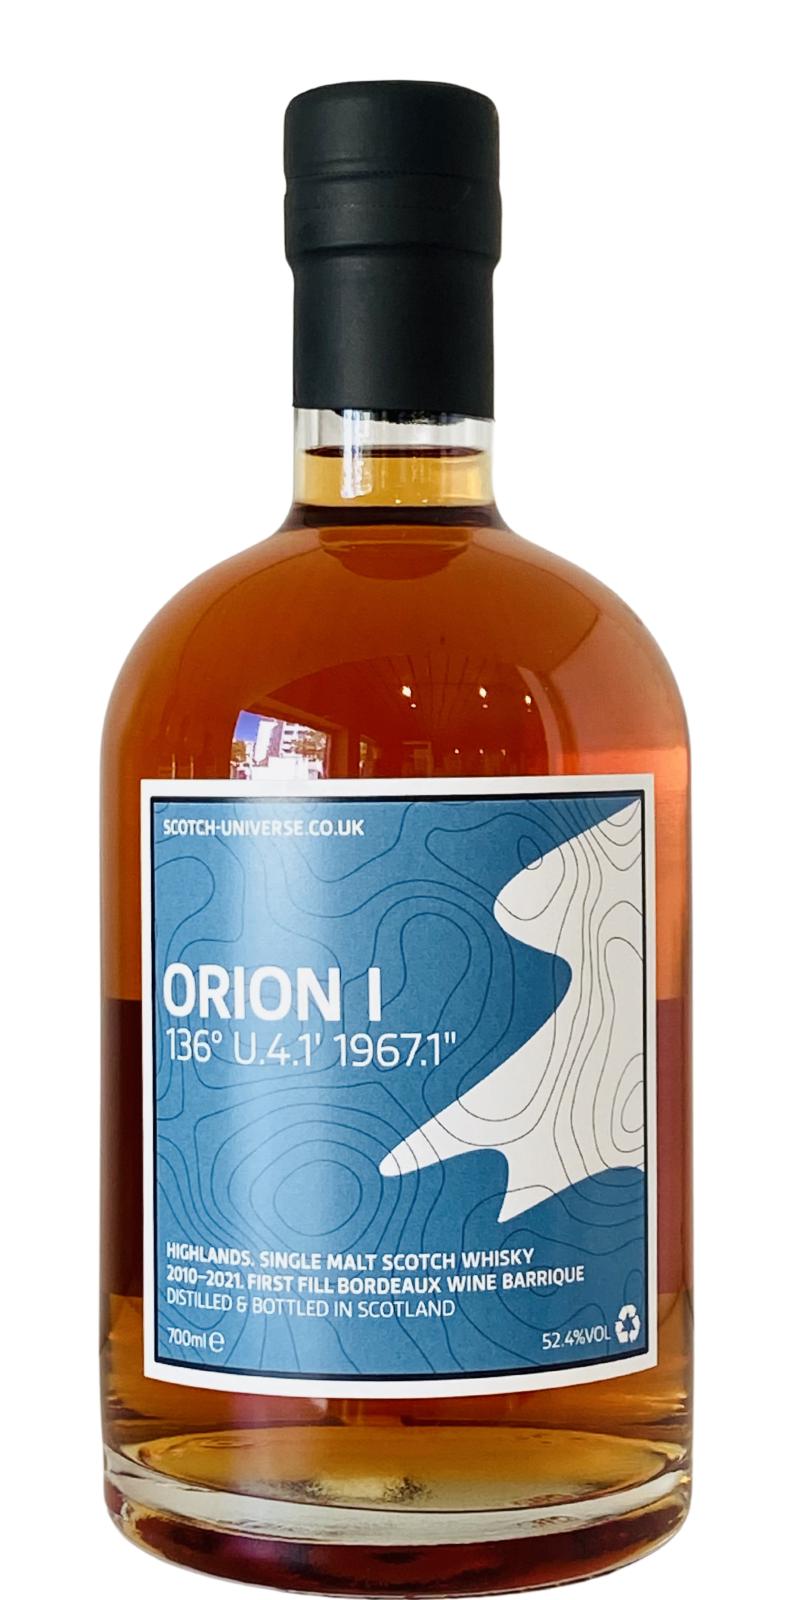 Scotch Universe Orion I - 136° U.4.1&#x27; 1967.1&quot;